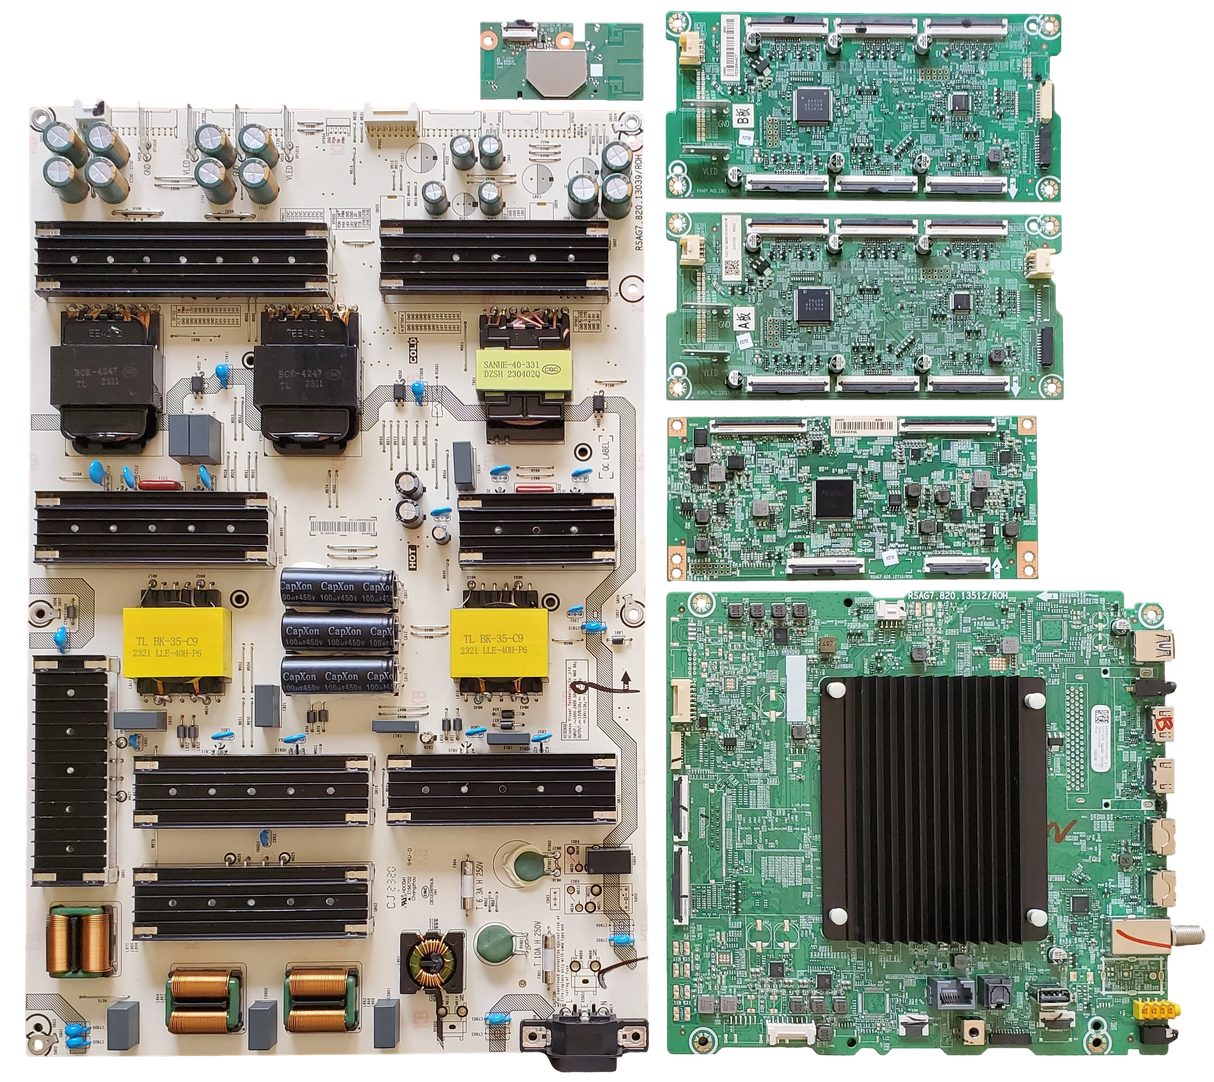 75U8K Hisense TV Repair Parts Kit, 345437 Main Board, 336845 Power Supply, 338397 T-Con, 335746 LED Driver, 335882 LED Driver, 1263279 Wifi, 75U8K